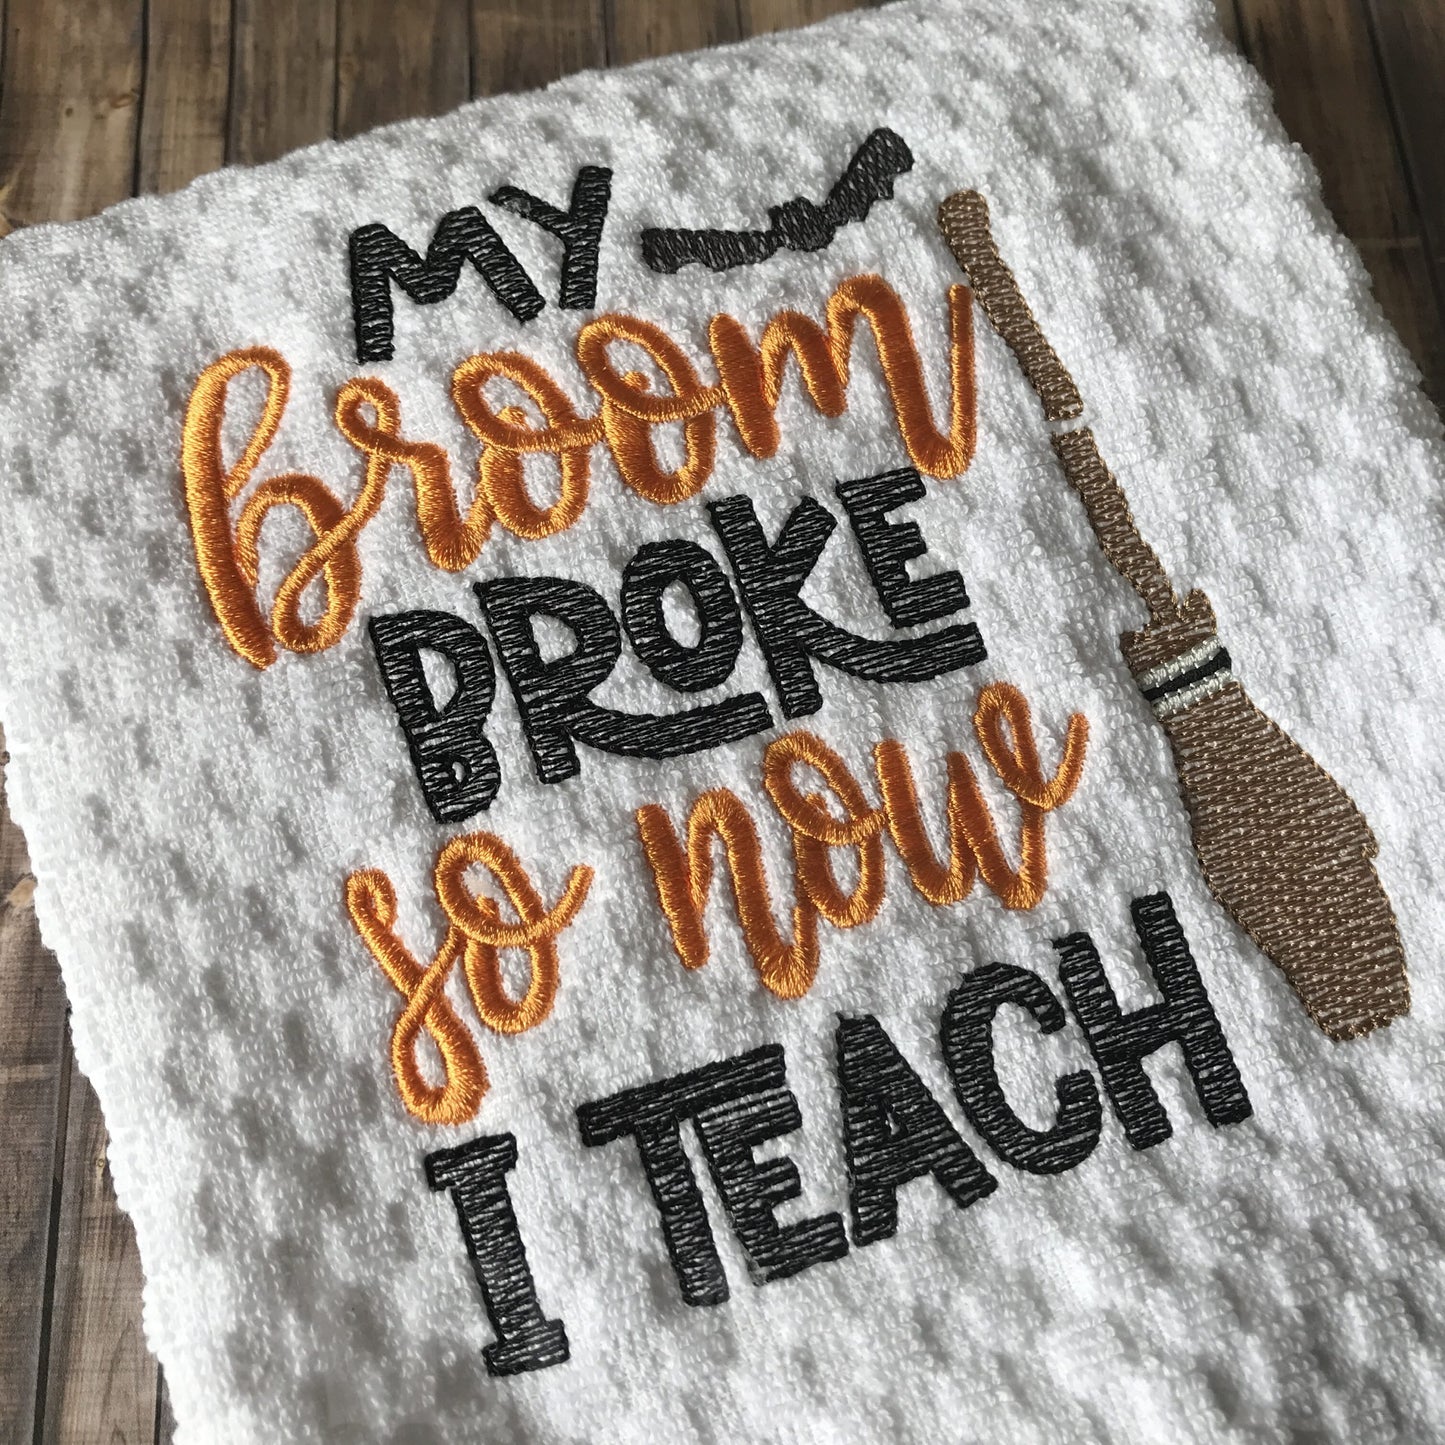 My Broom Broke So Now I Teach - 2 Sizes - Digital Embroidery Design